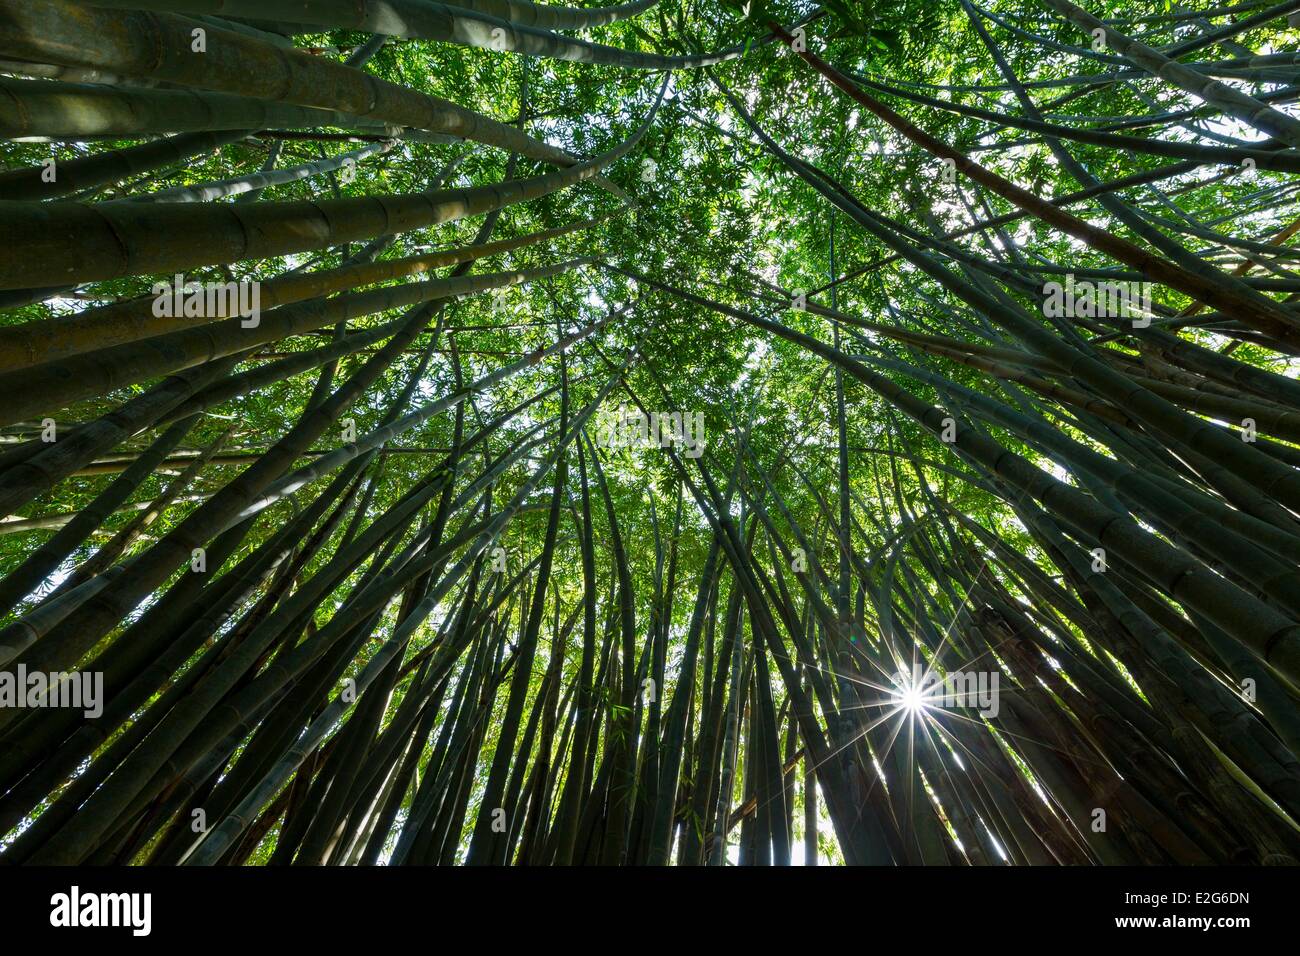 Sri Lanka Central province Kandy district Kandy Peradeniya royal botanical gardens giant bamboos (Dendrocalamus giganteus) Stock Photo